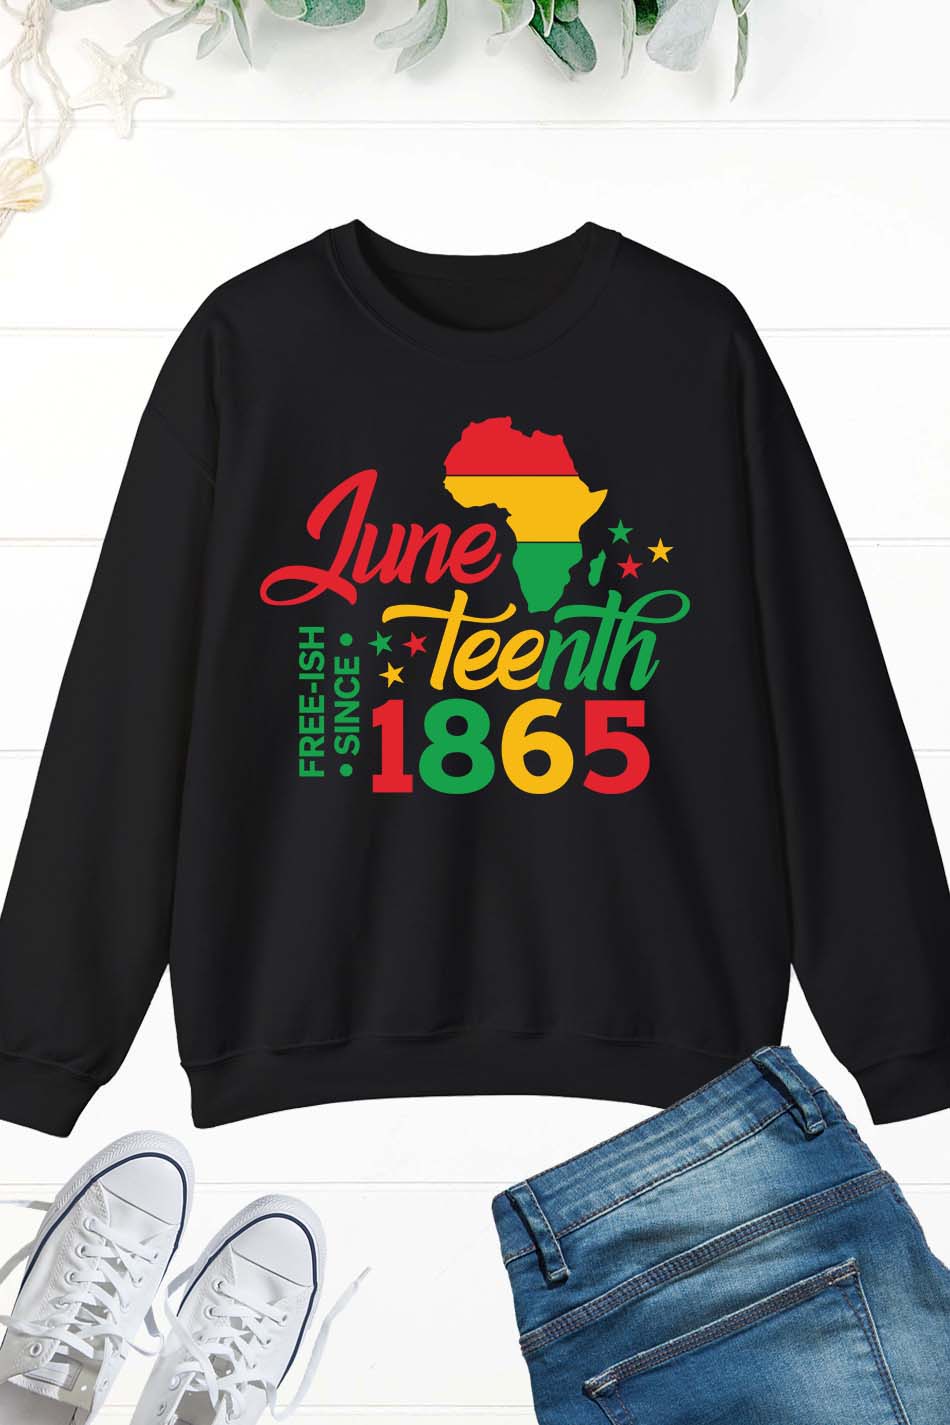 June 10th 1865 Black history Sweatshirt